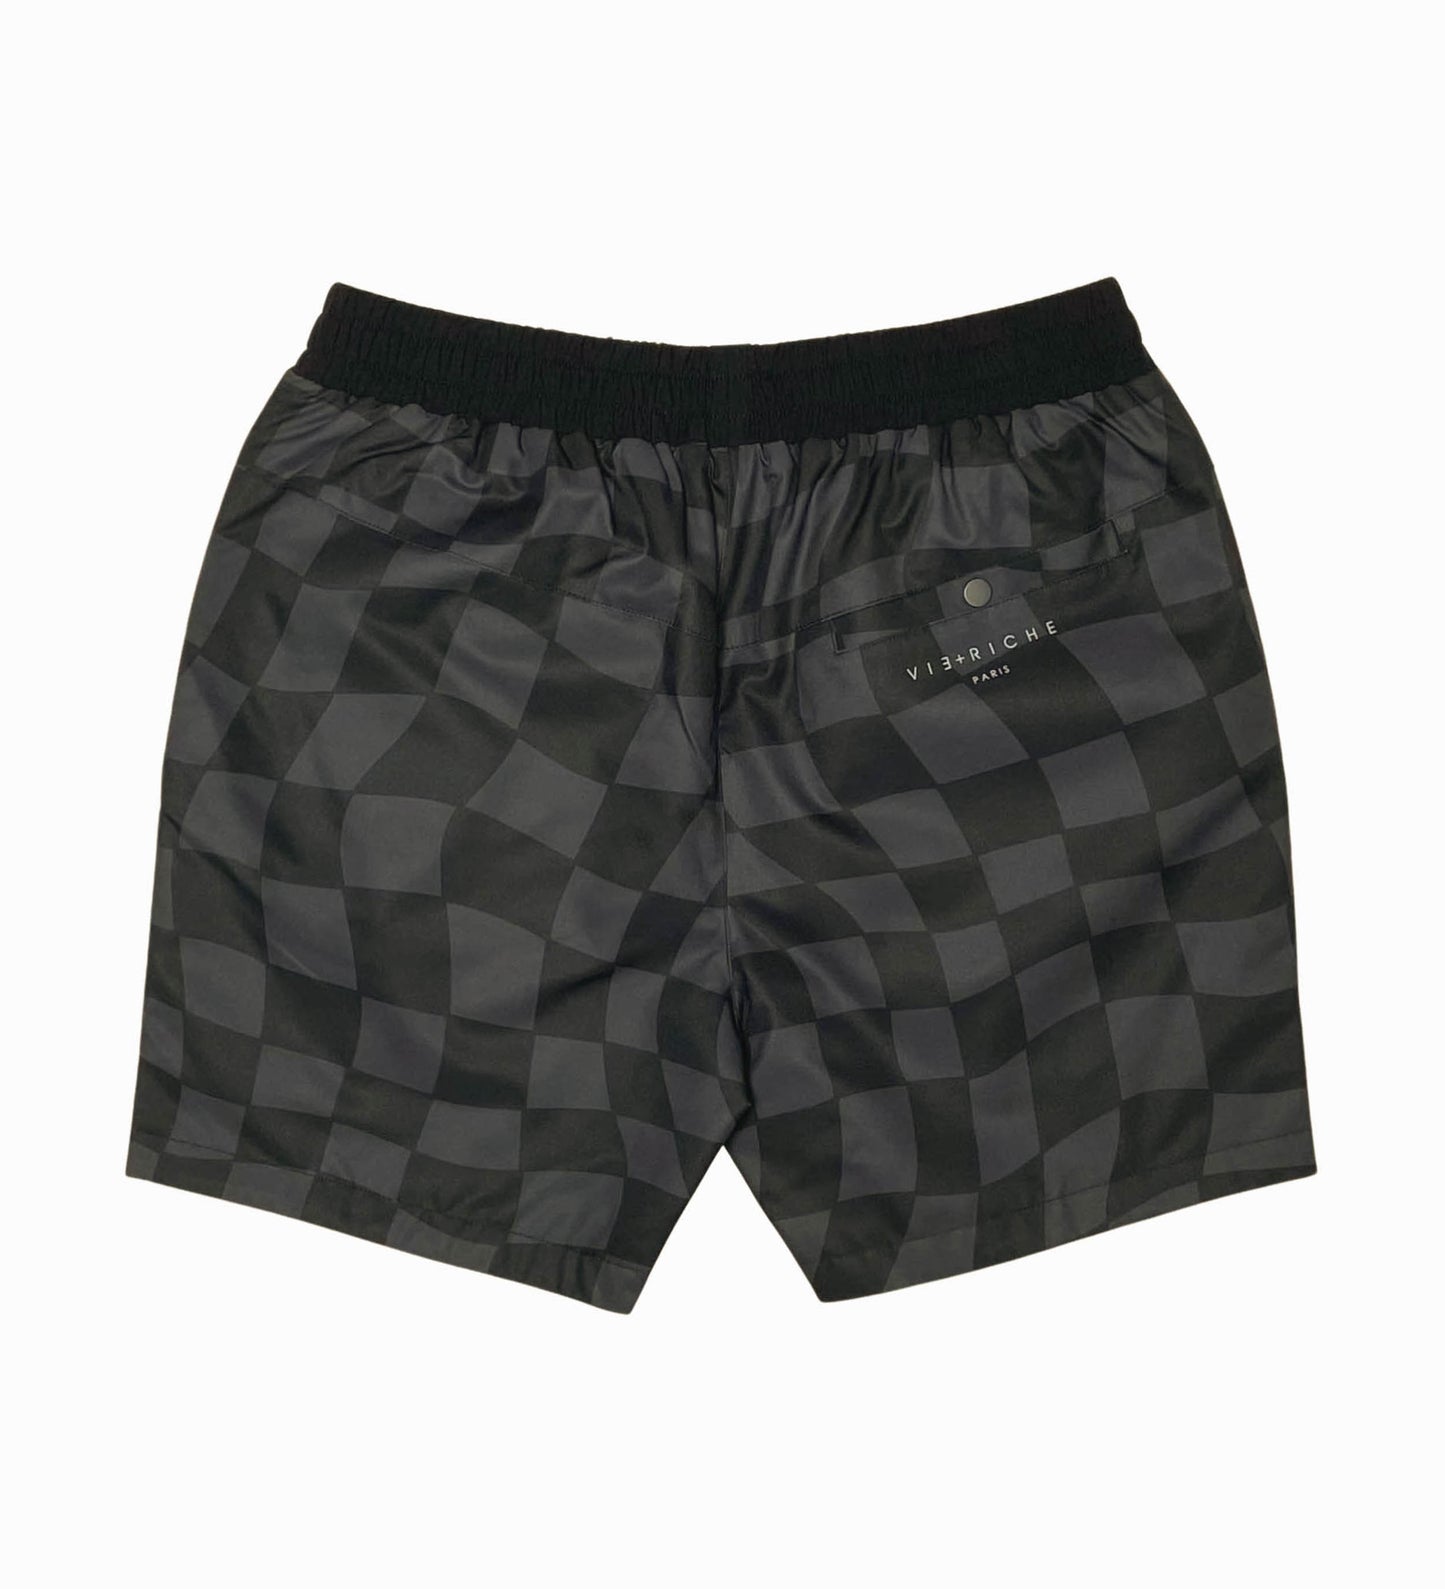 Checkered MCS Shorts